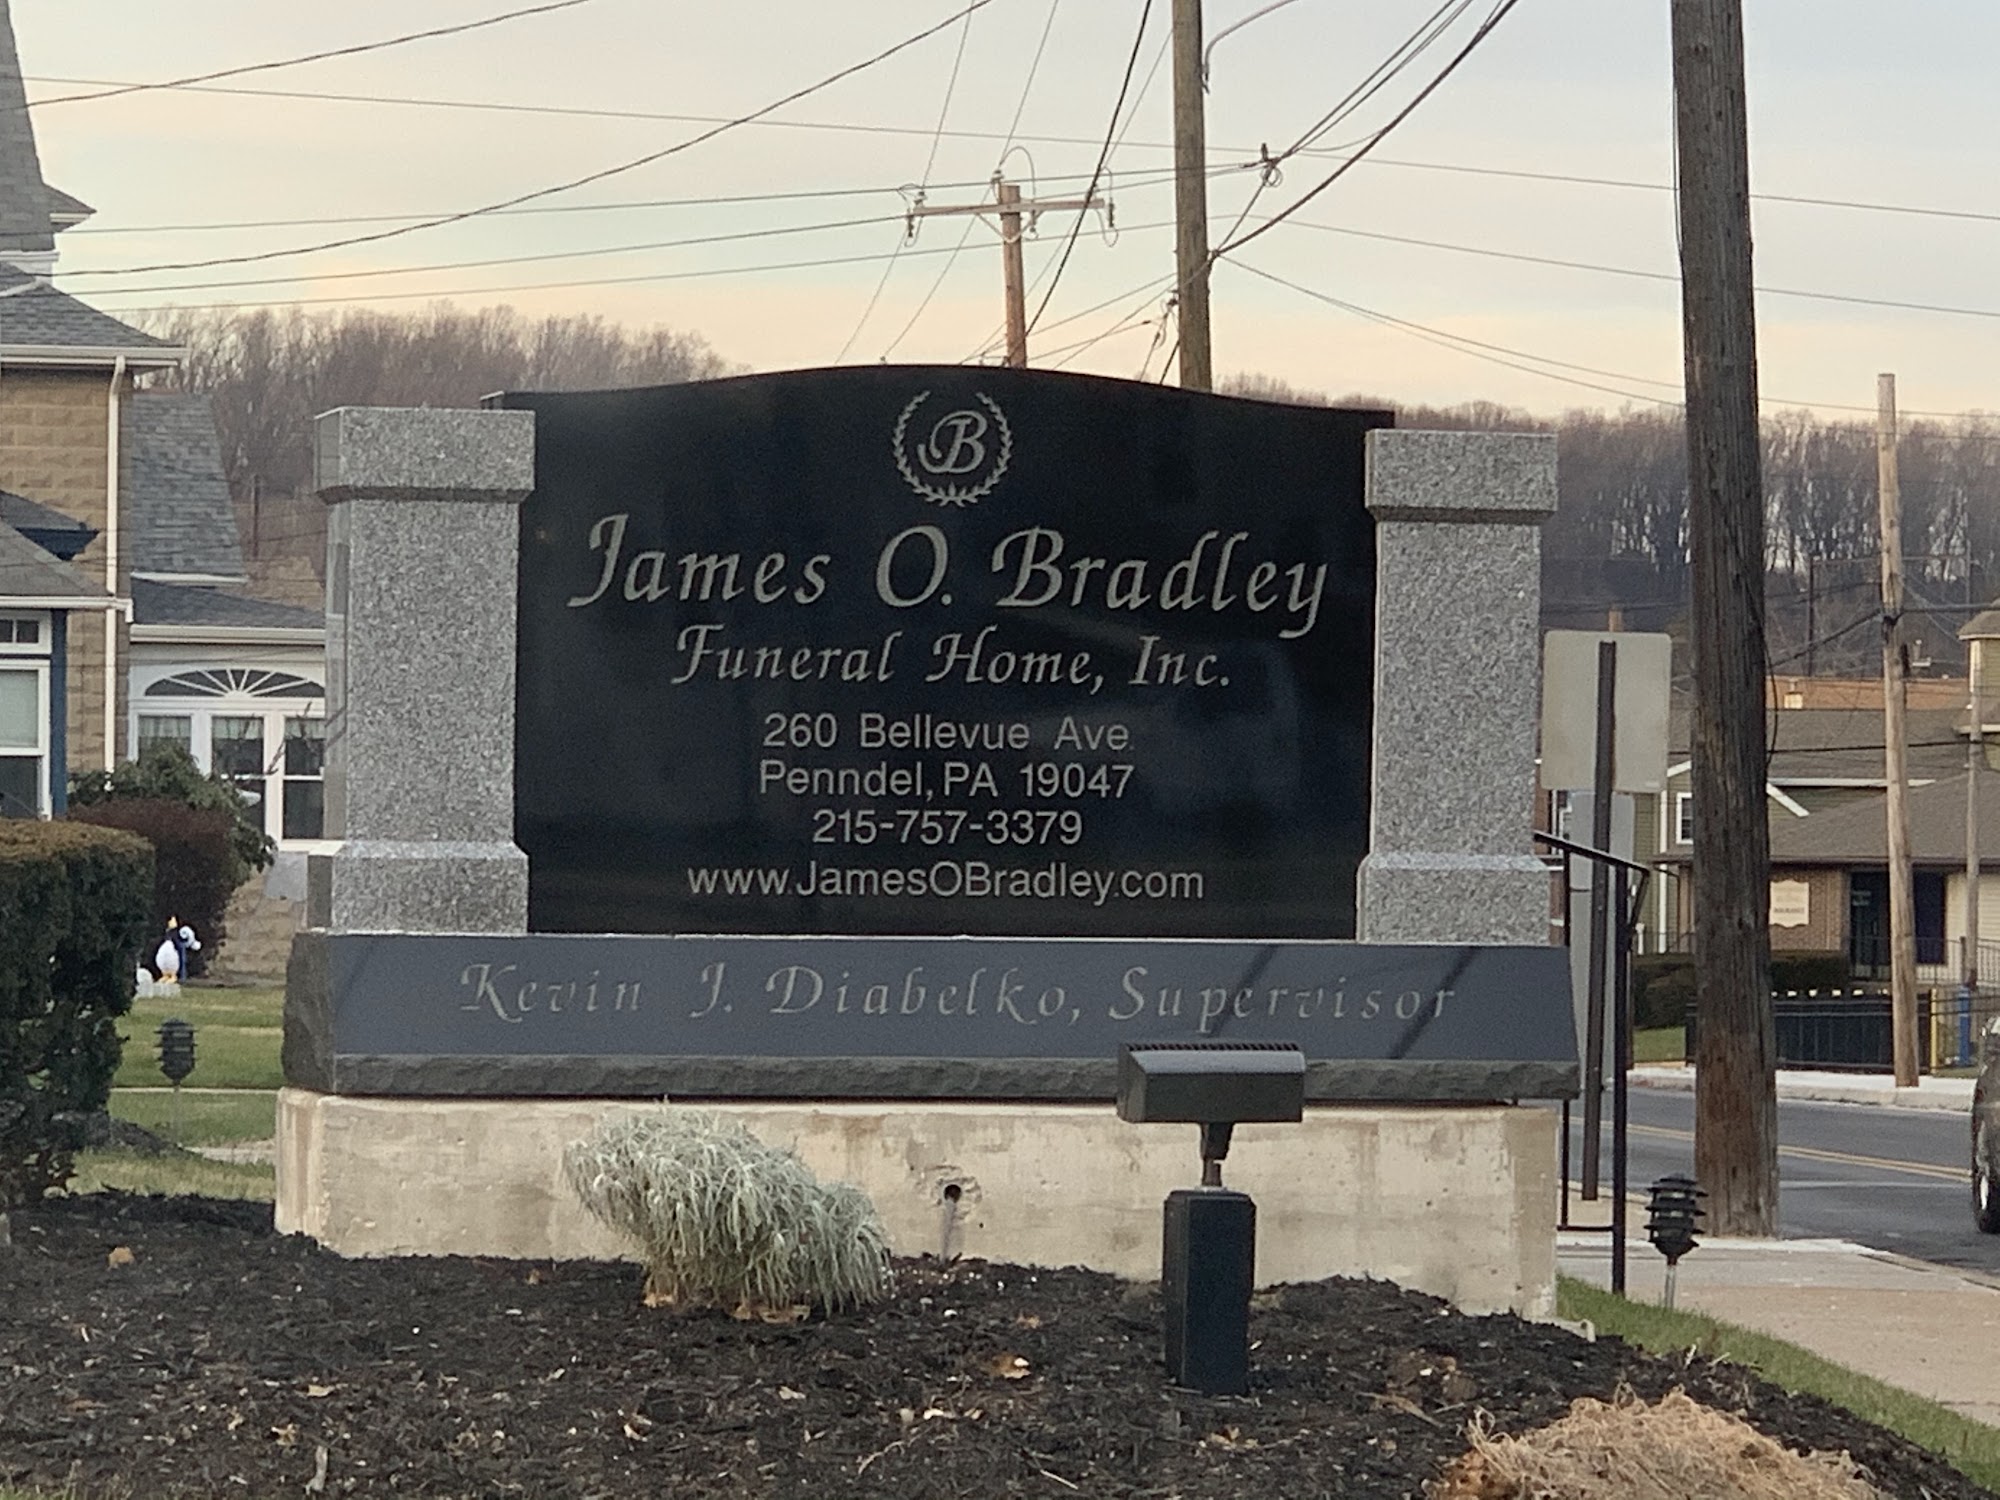 James O. Bradley Funeral Home 260 Bellevue Ave, Penndel Pennsylvania 19047